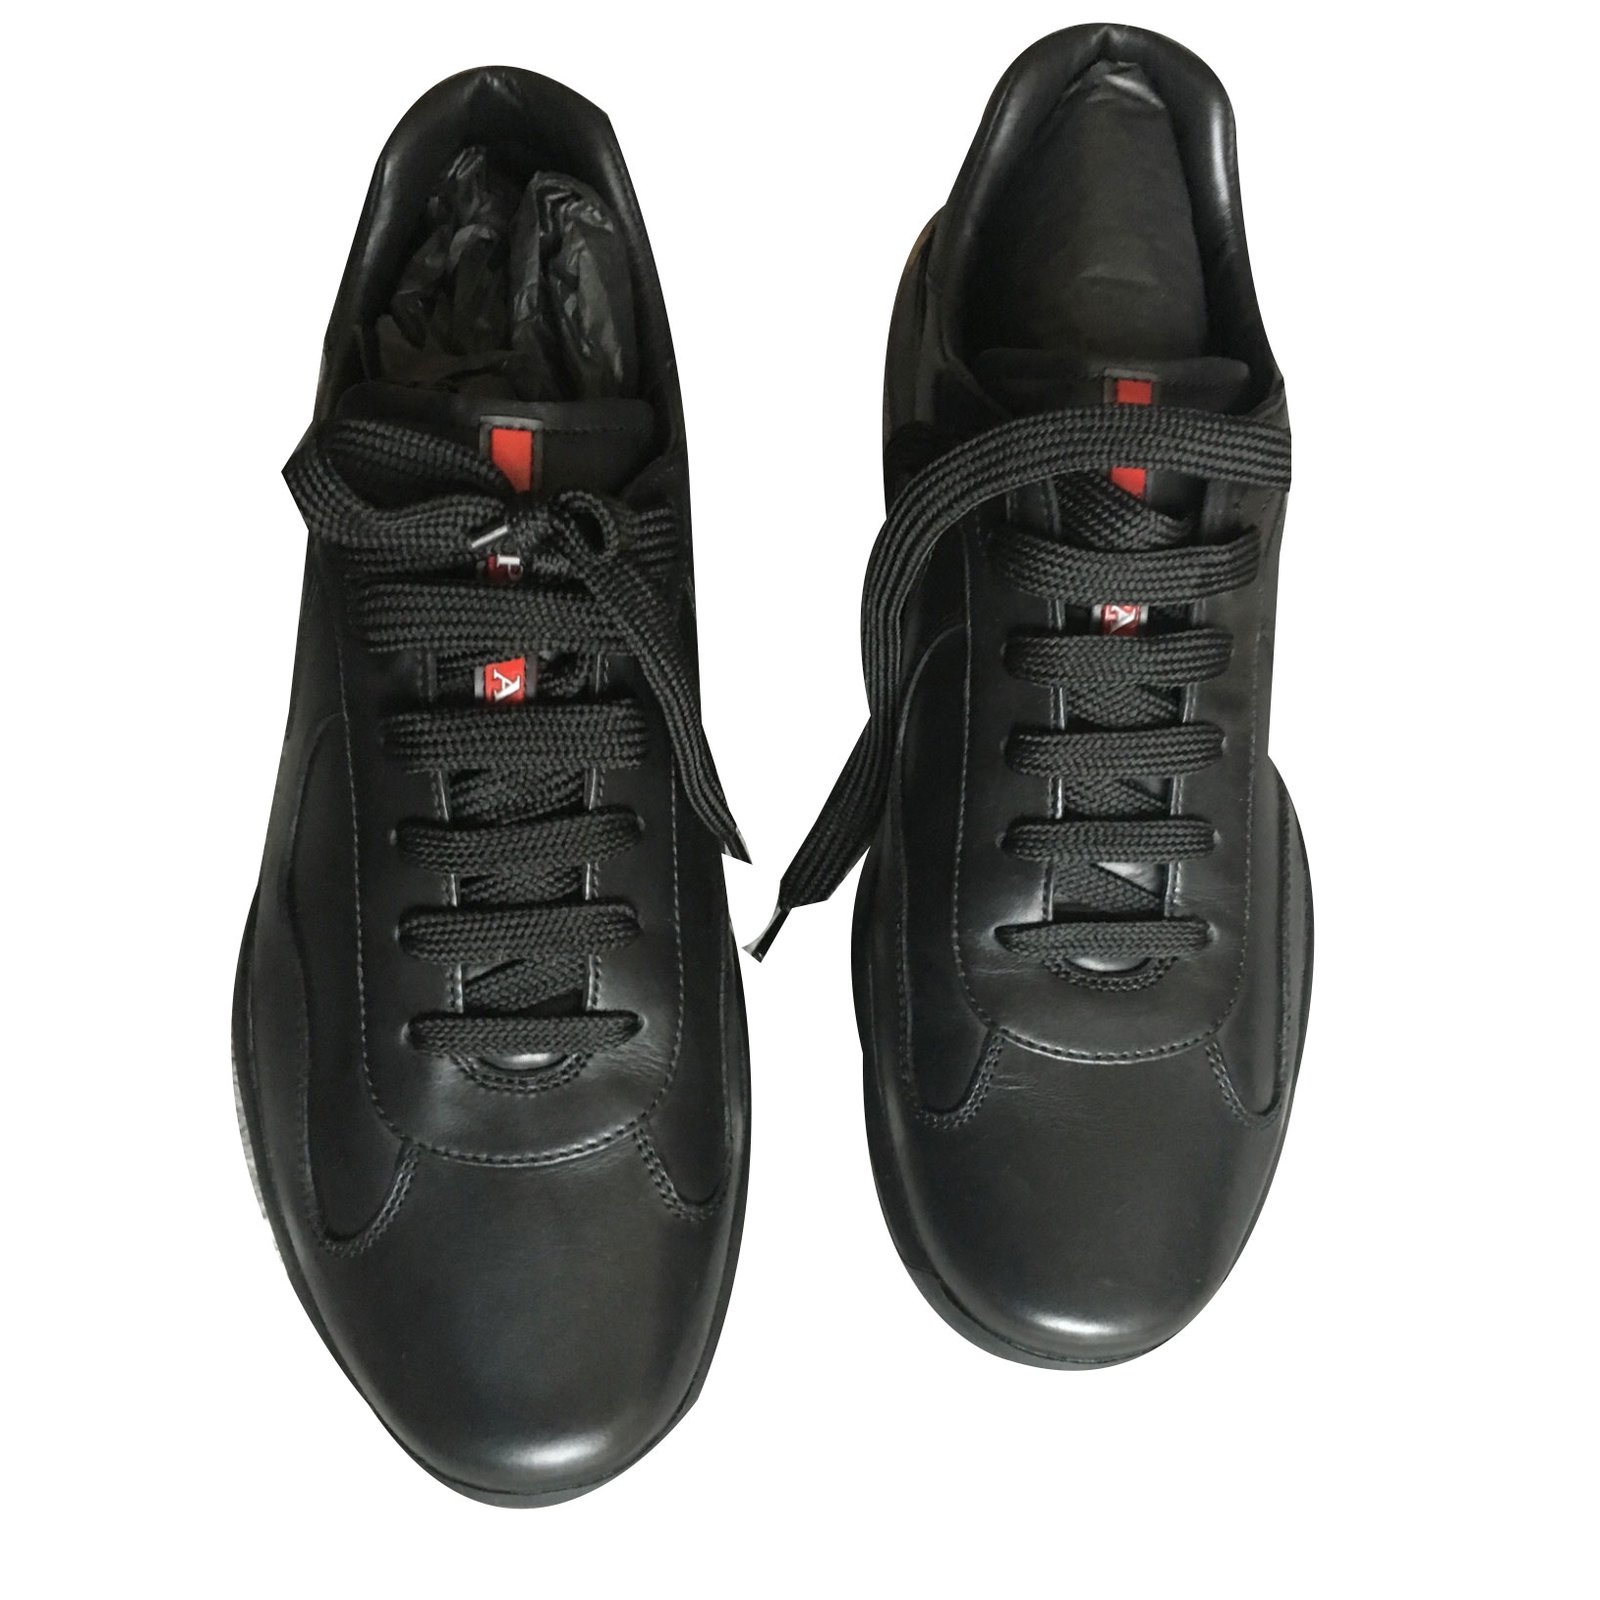 Prada Prada shoes new Sneakers Leather 